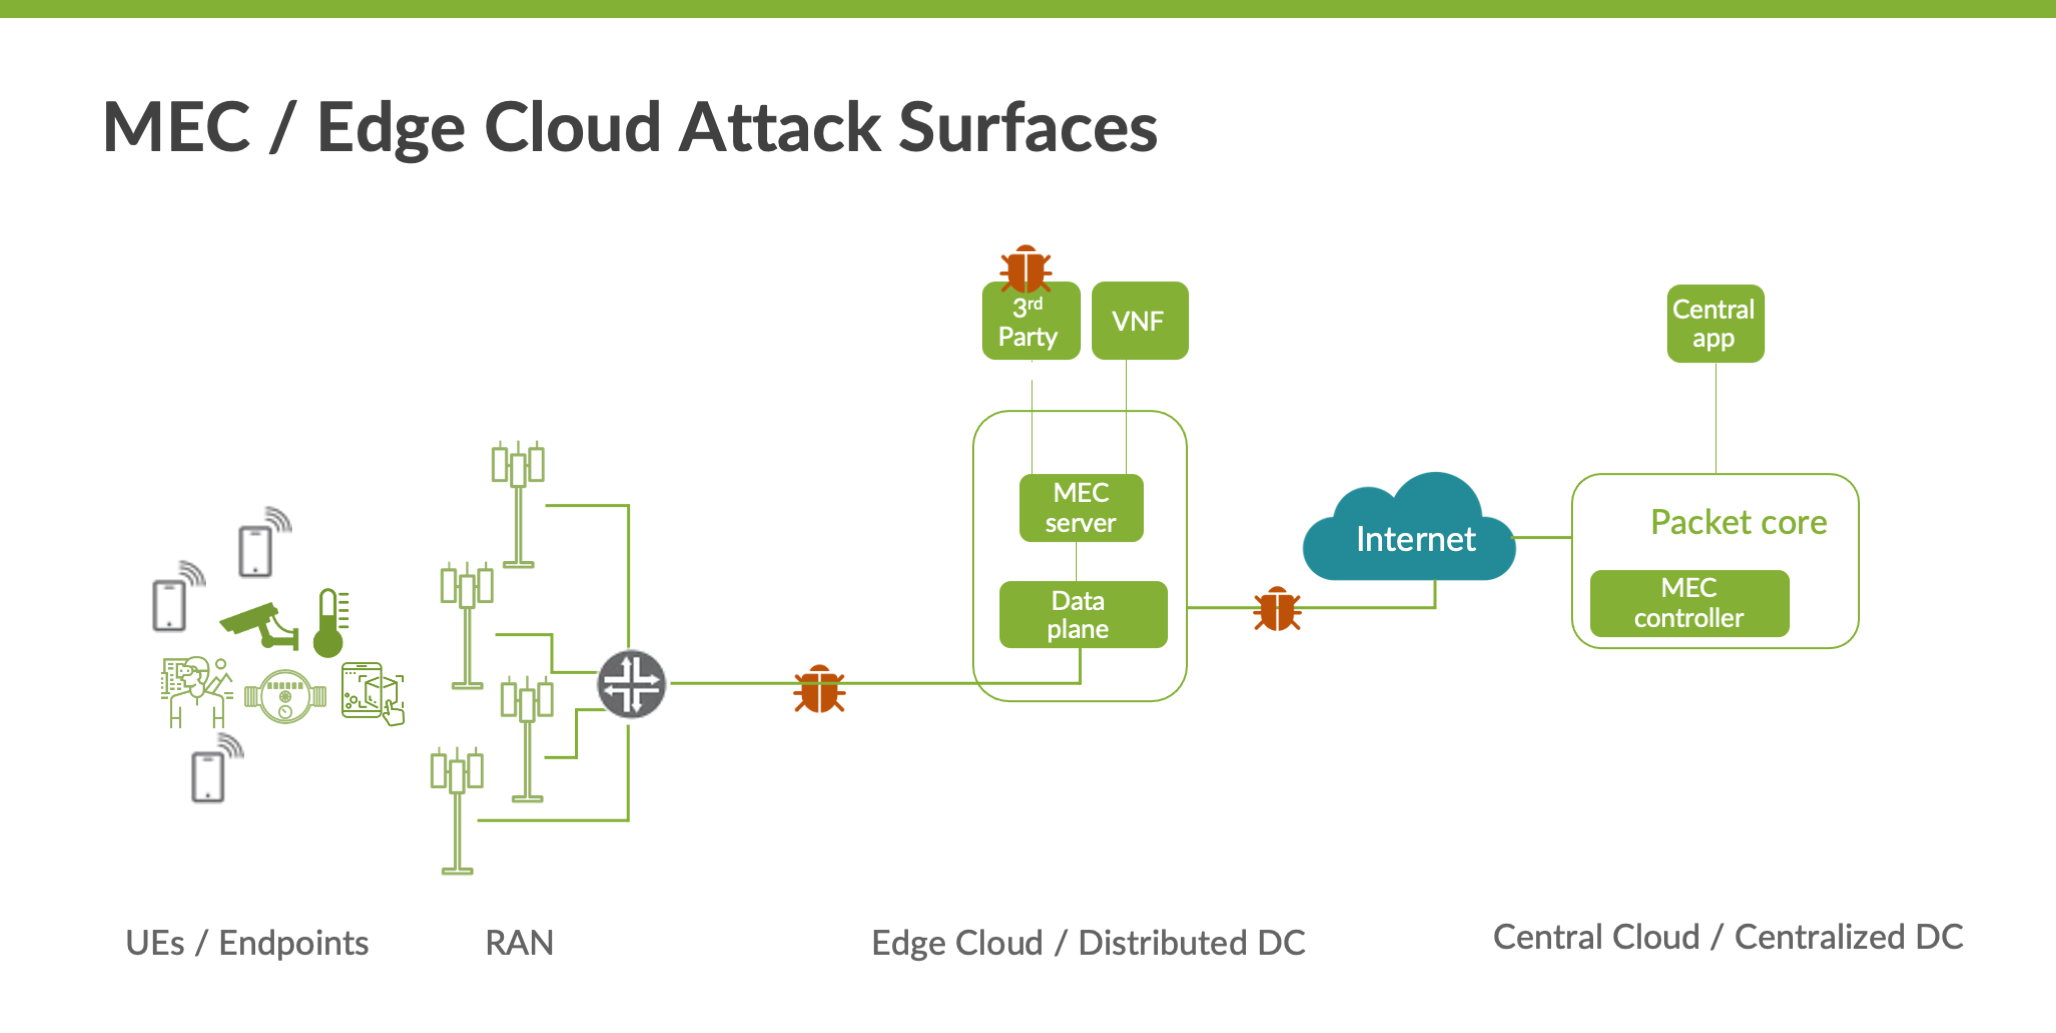 5G Edge Cloud and Multi-access Edge Computing (MEC) Security